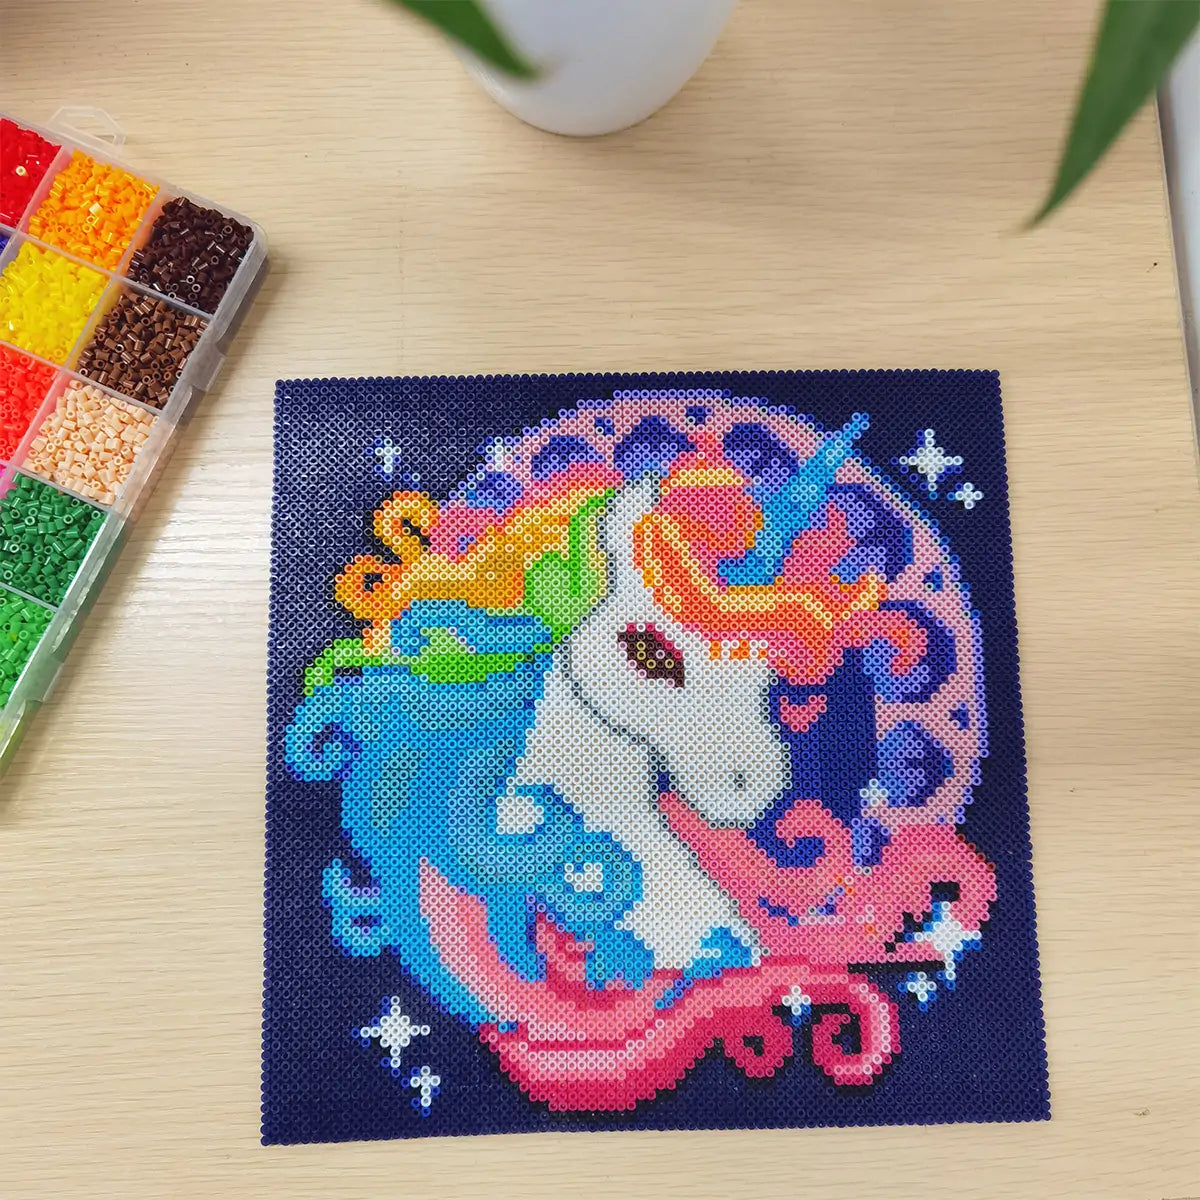 artkal fuse beads midnight Unicorn Pixel Painting